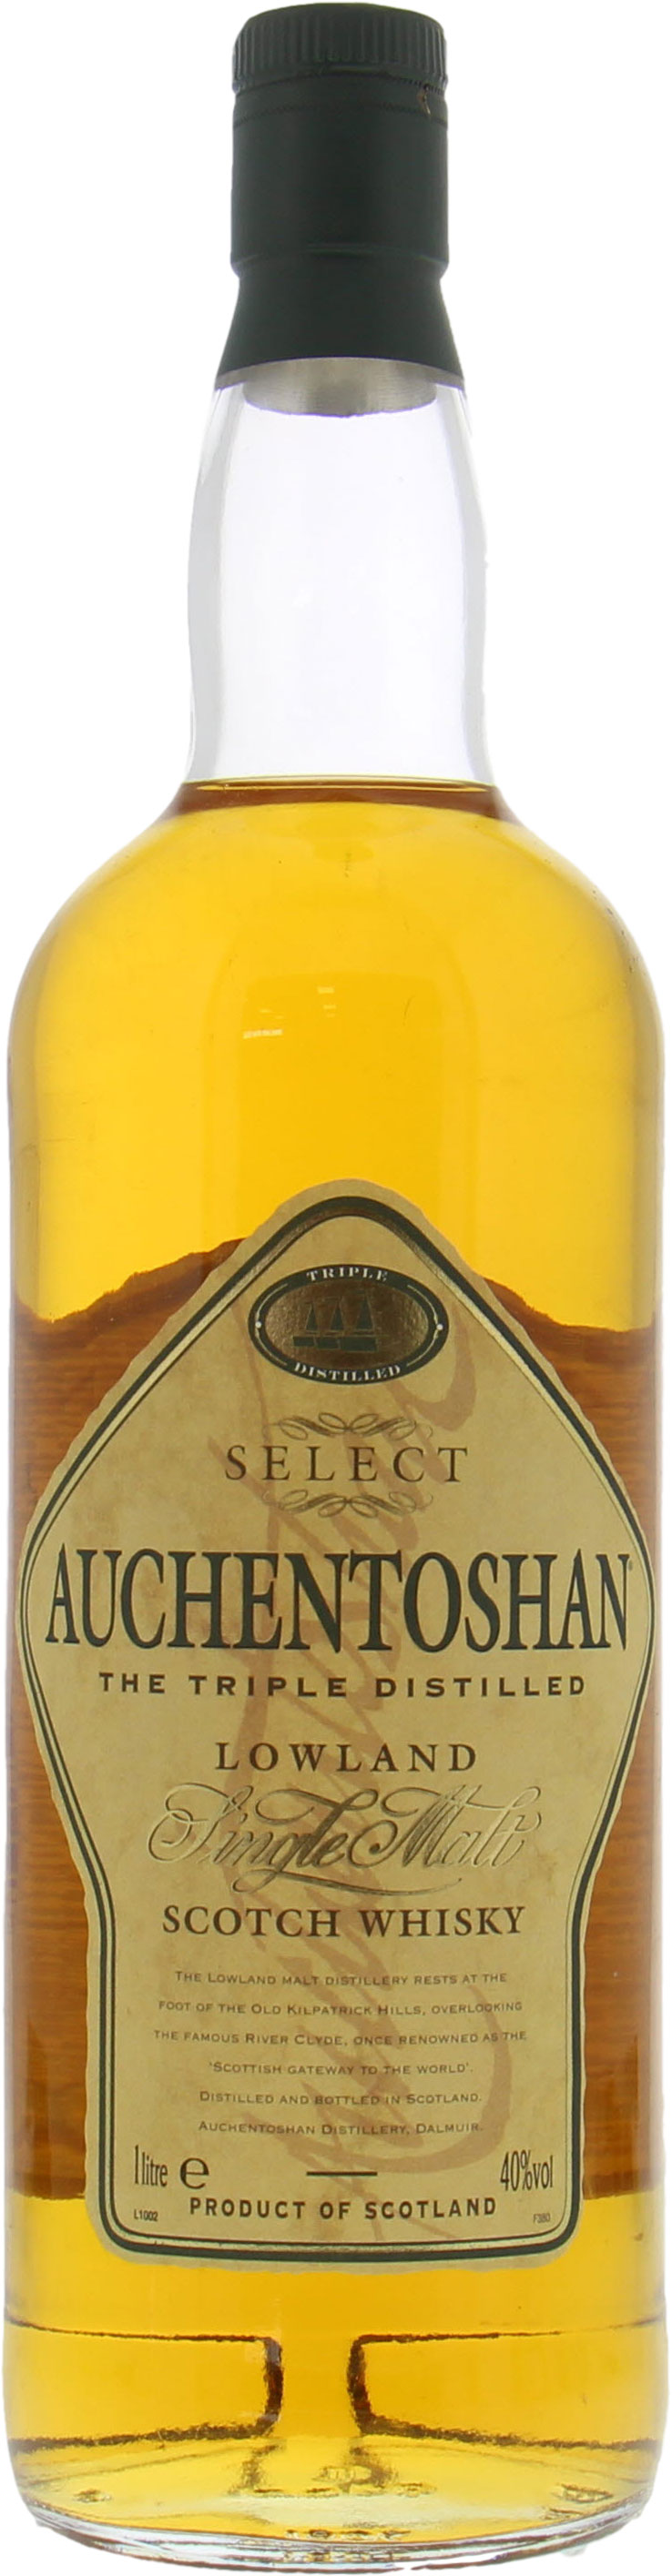 Auchentoshan - Select Old Label 40% NV